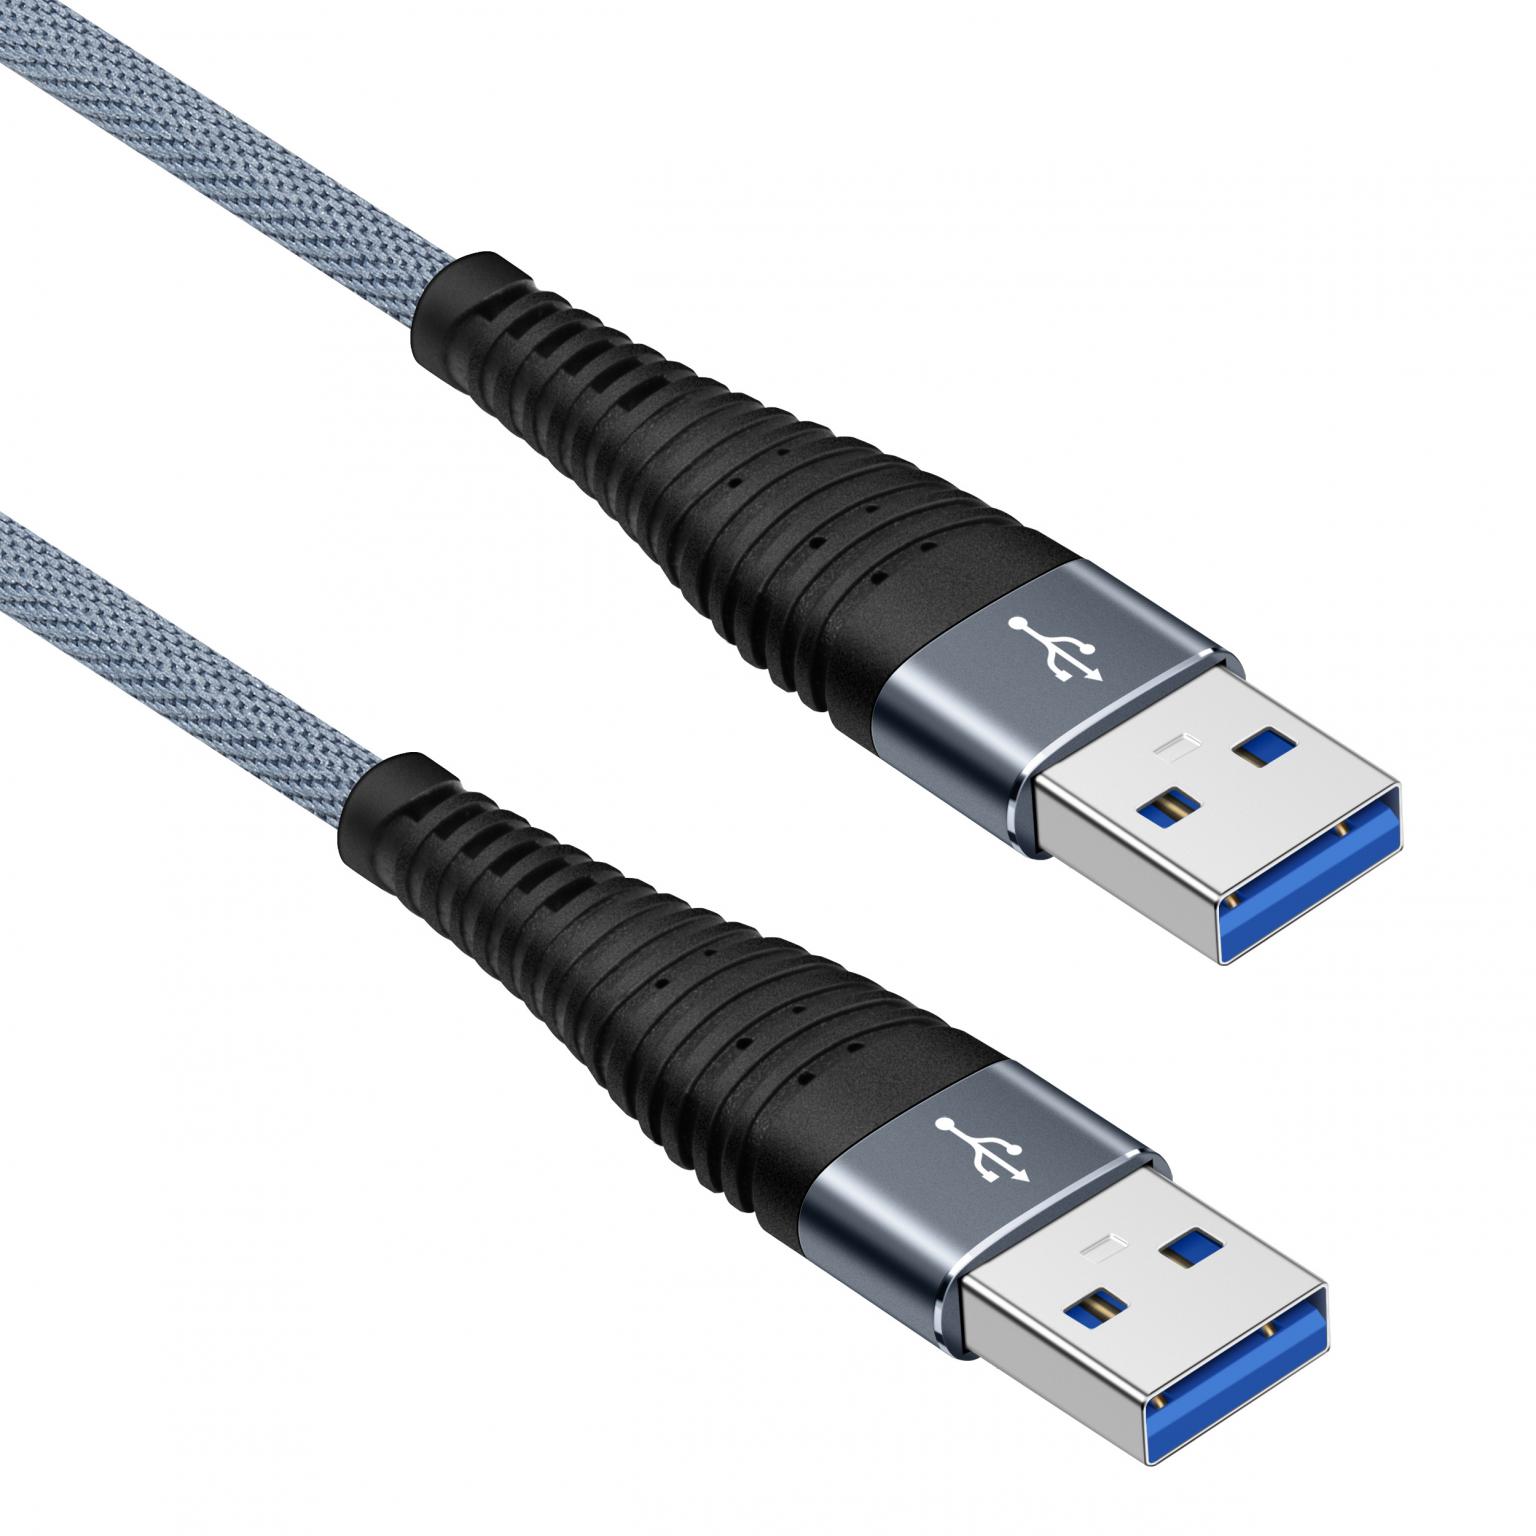 USB A kabel - Allteq